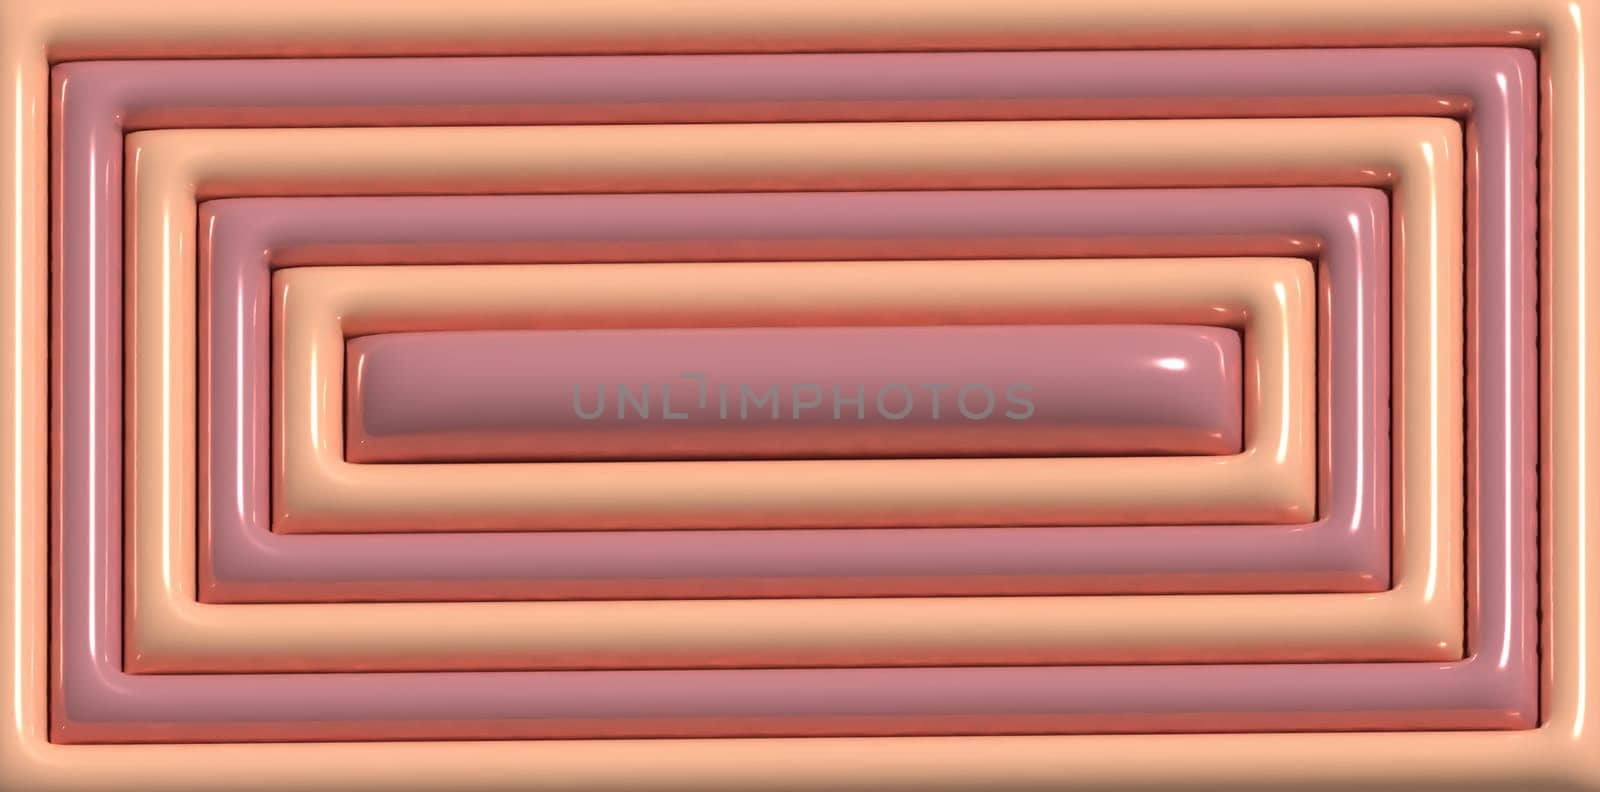 Pink inflated rectangular shapes, 3D rendering illustration